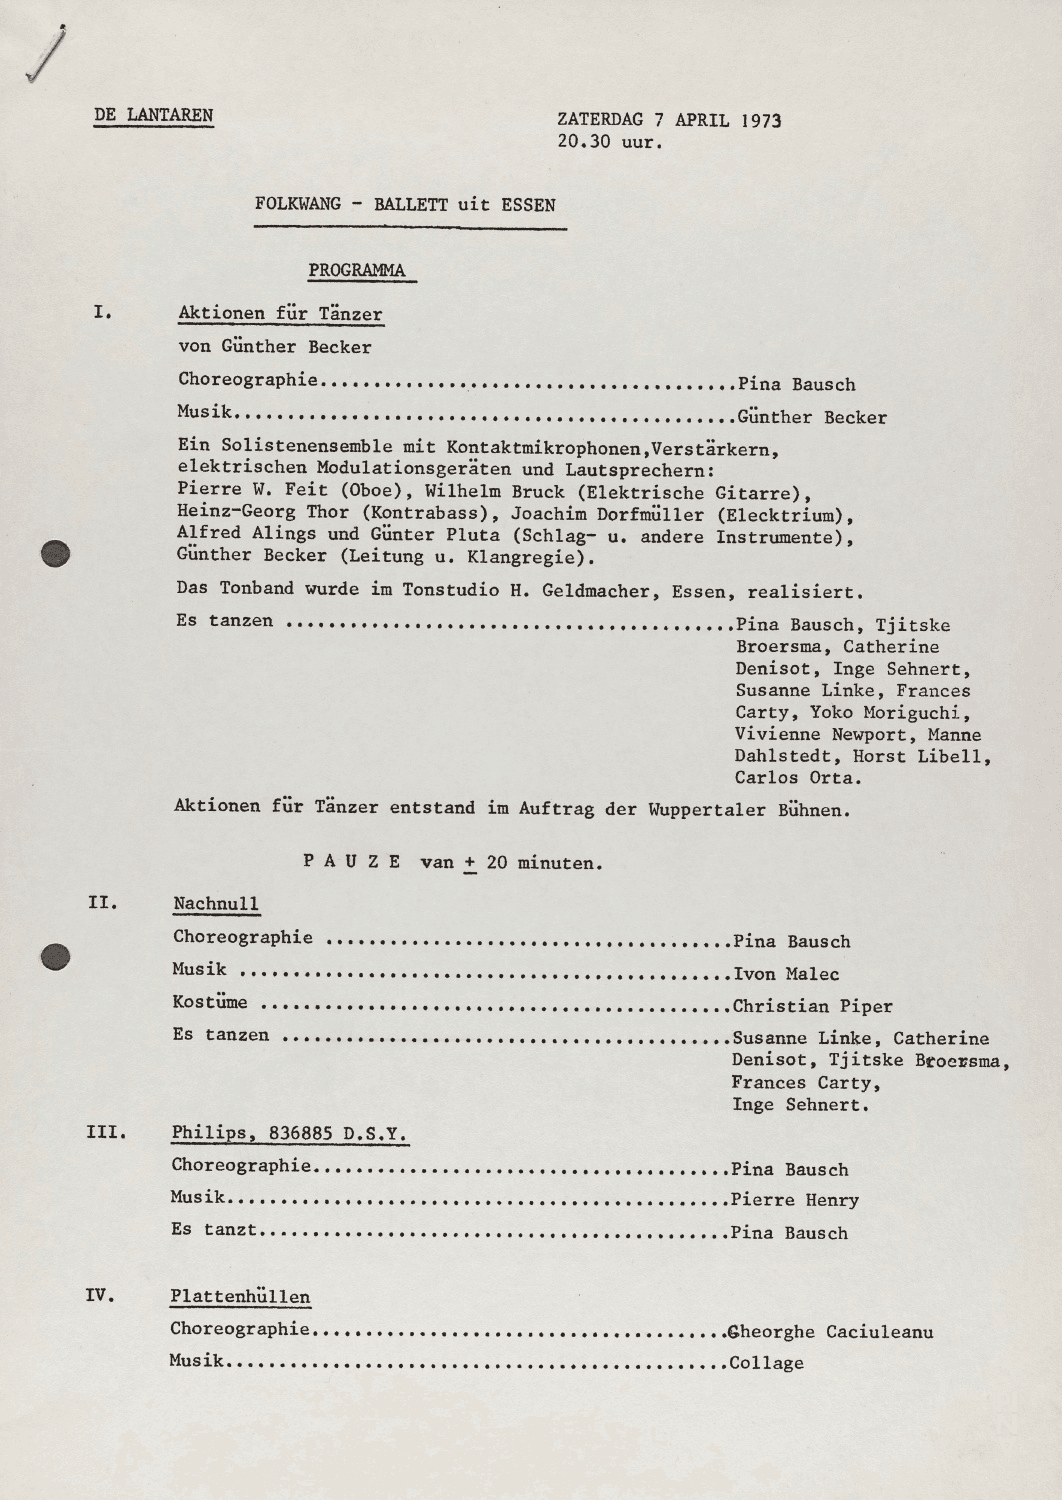 Programme pour « Nachnull (Après Zéro) », « Aktionen für Tänzer », « PHILIPS 836 887 DSY » et « Wiegenlied » de Pina Bausch avec Folkwangballett à Rotterdam, 7 avril 1973